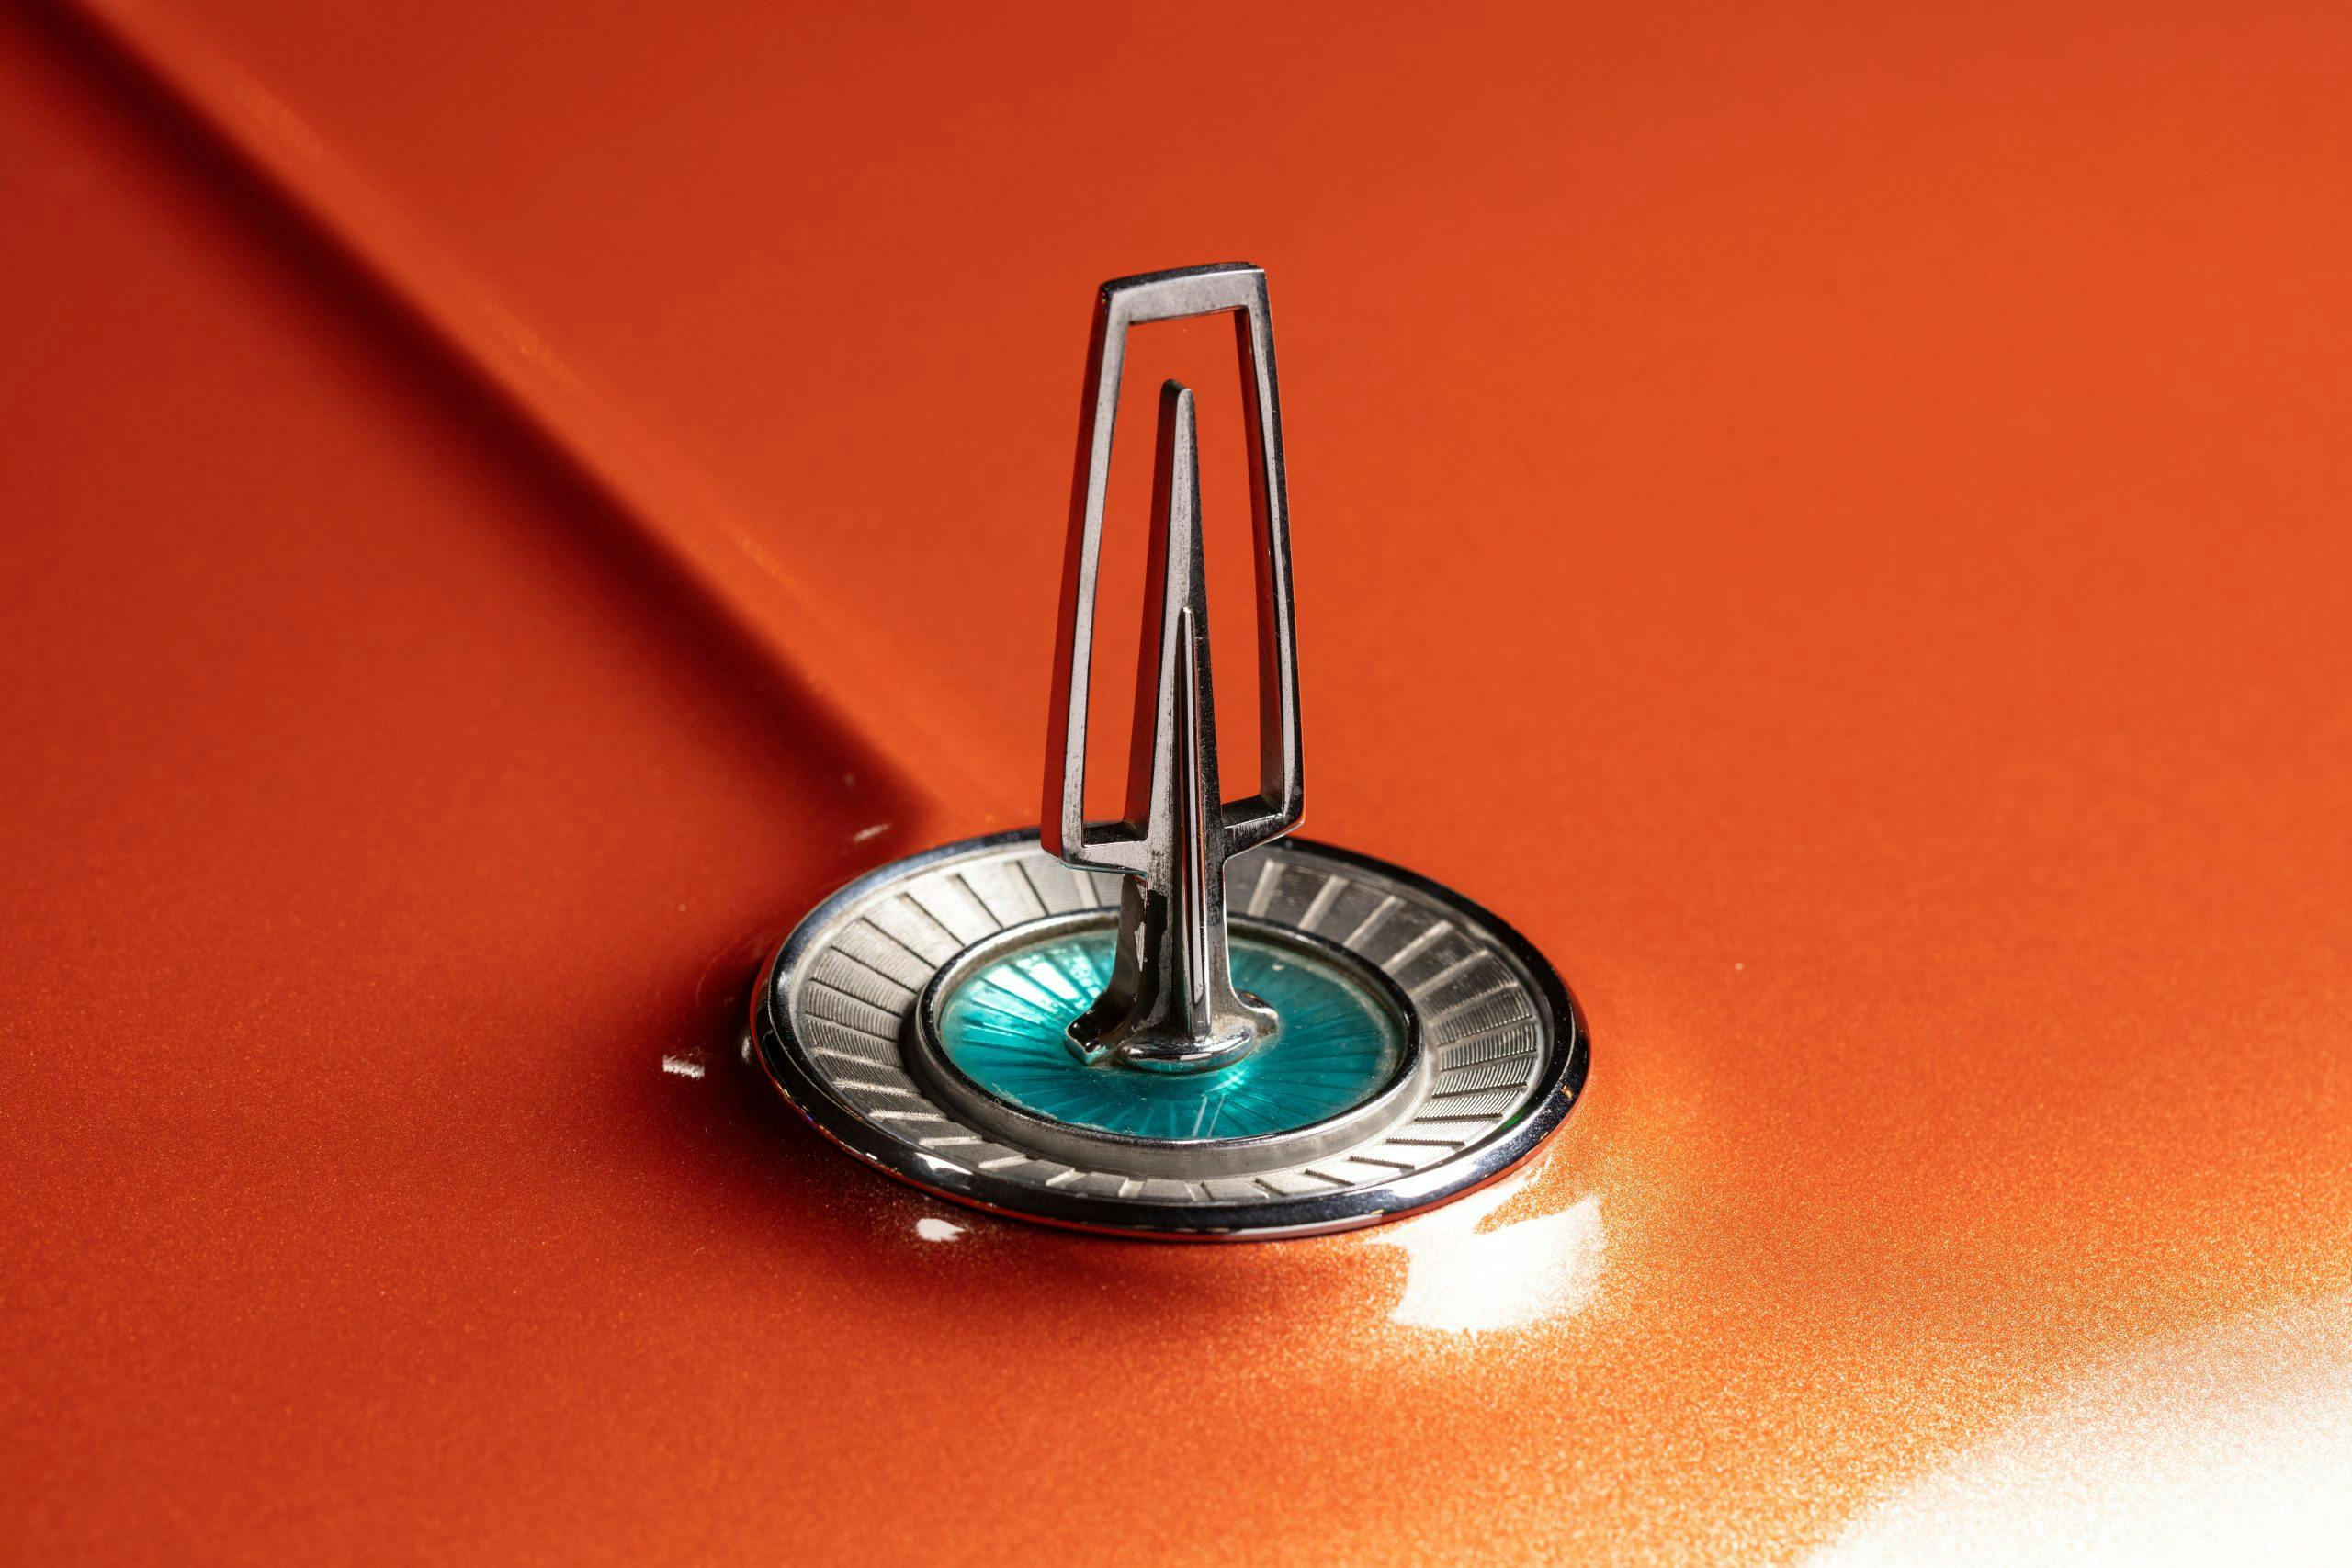 Chrysler Turbine car hood ornament closeup